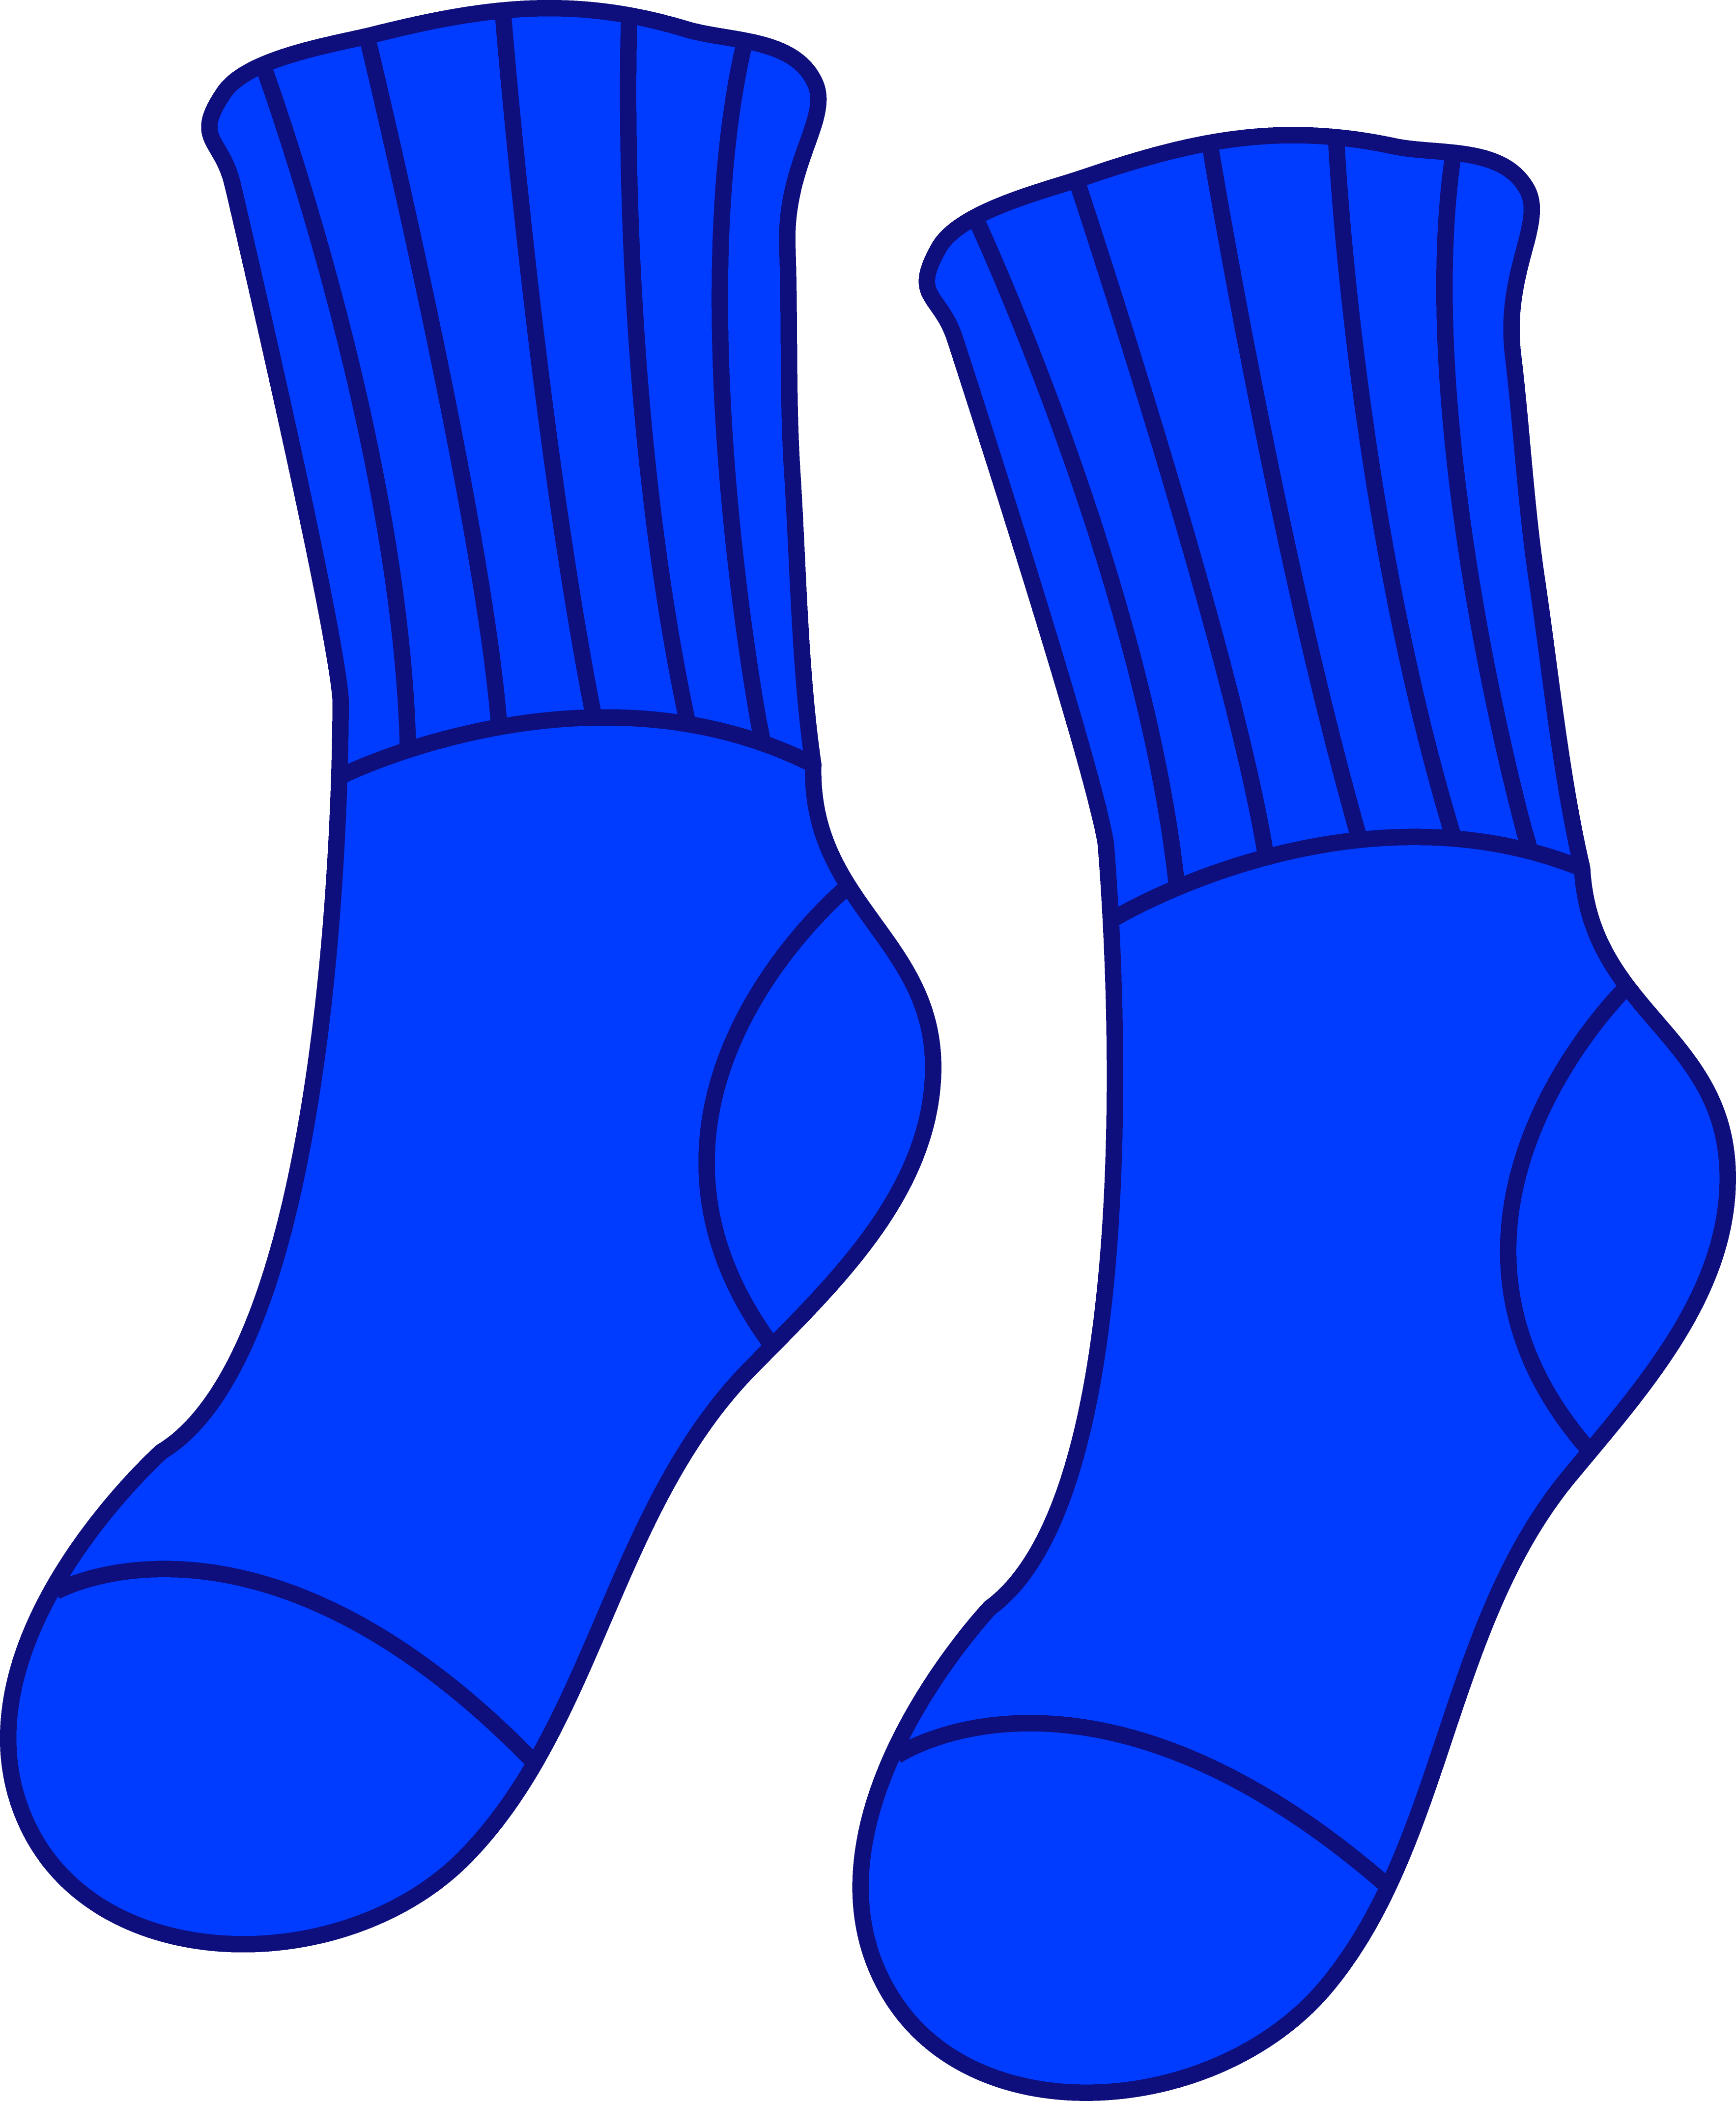 Free Winter Socks Cliparts, Download Free Clip Art, Free